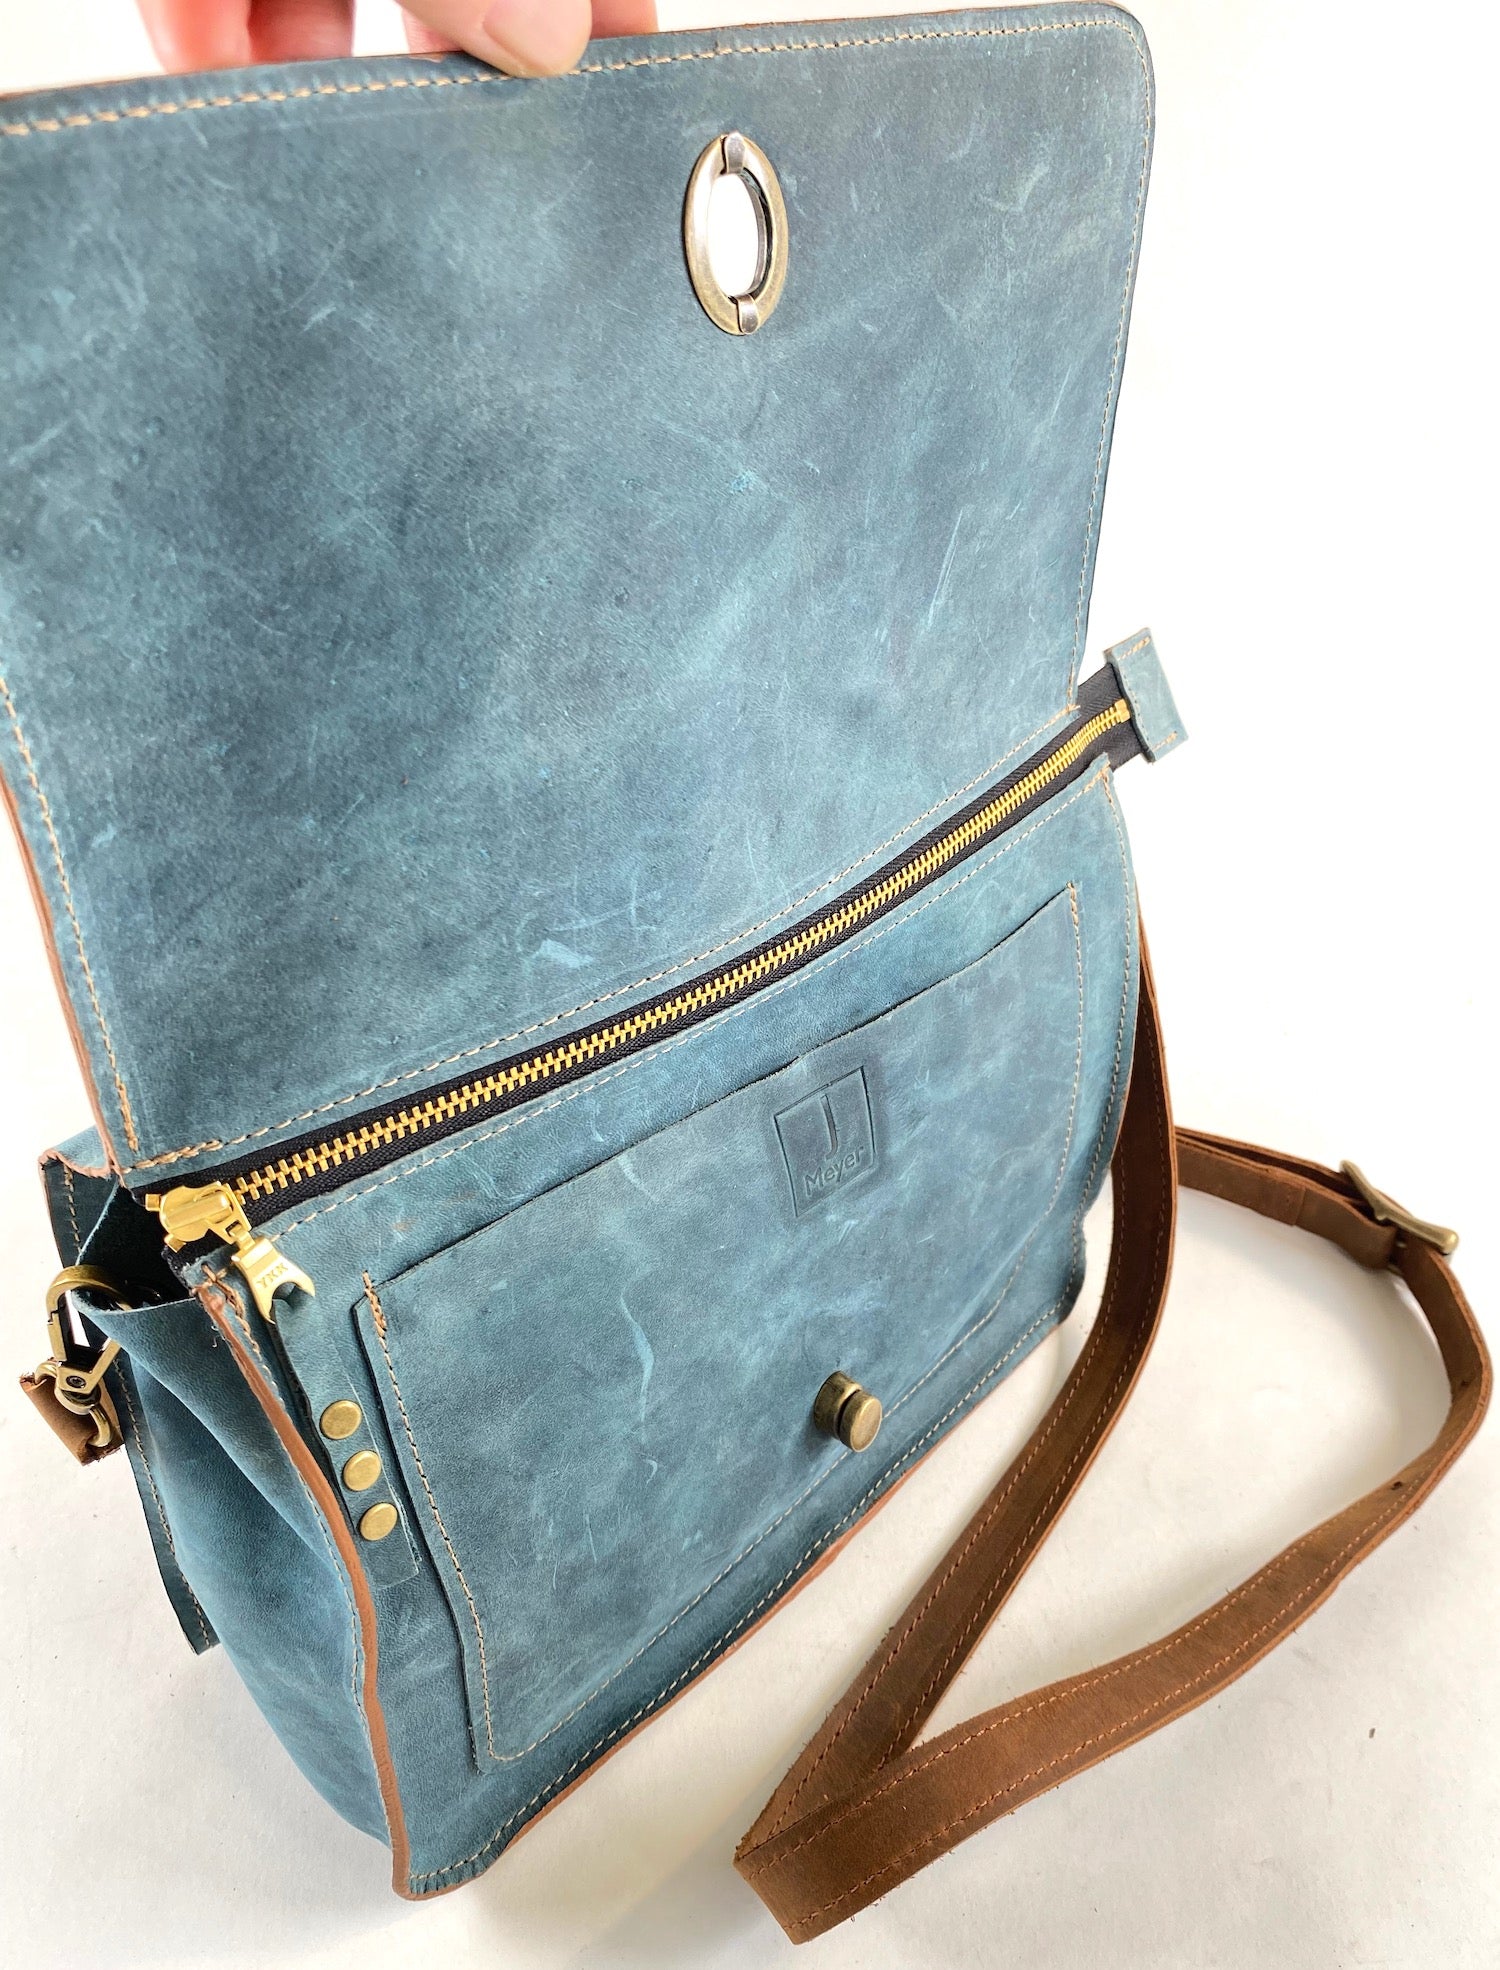 Clare V Paul Satchel Suede Leather Crossbody Bag Purse Handbag NWT Navy  Blue